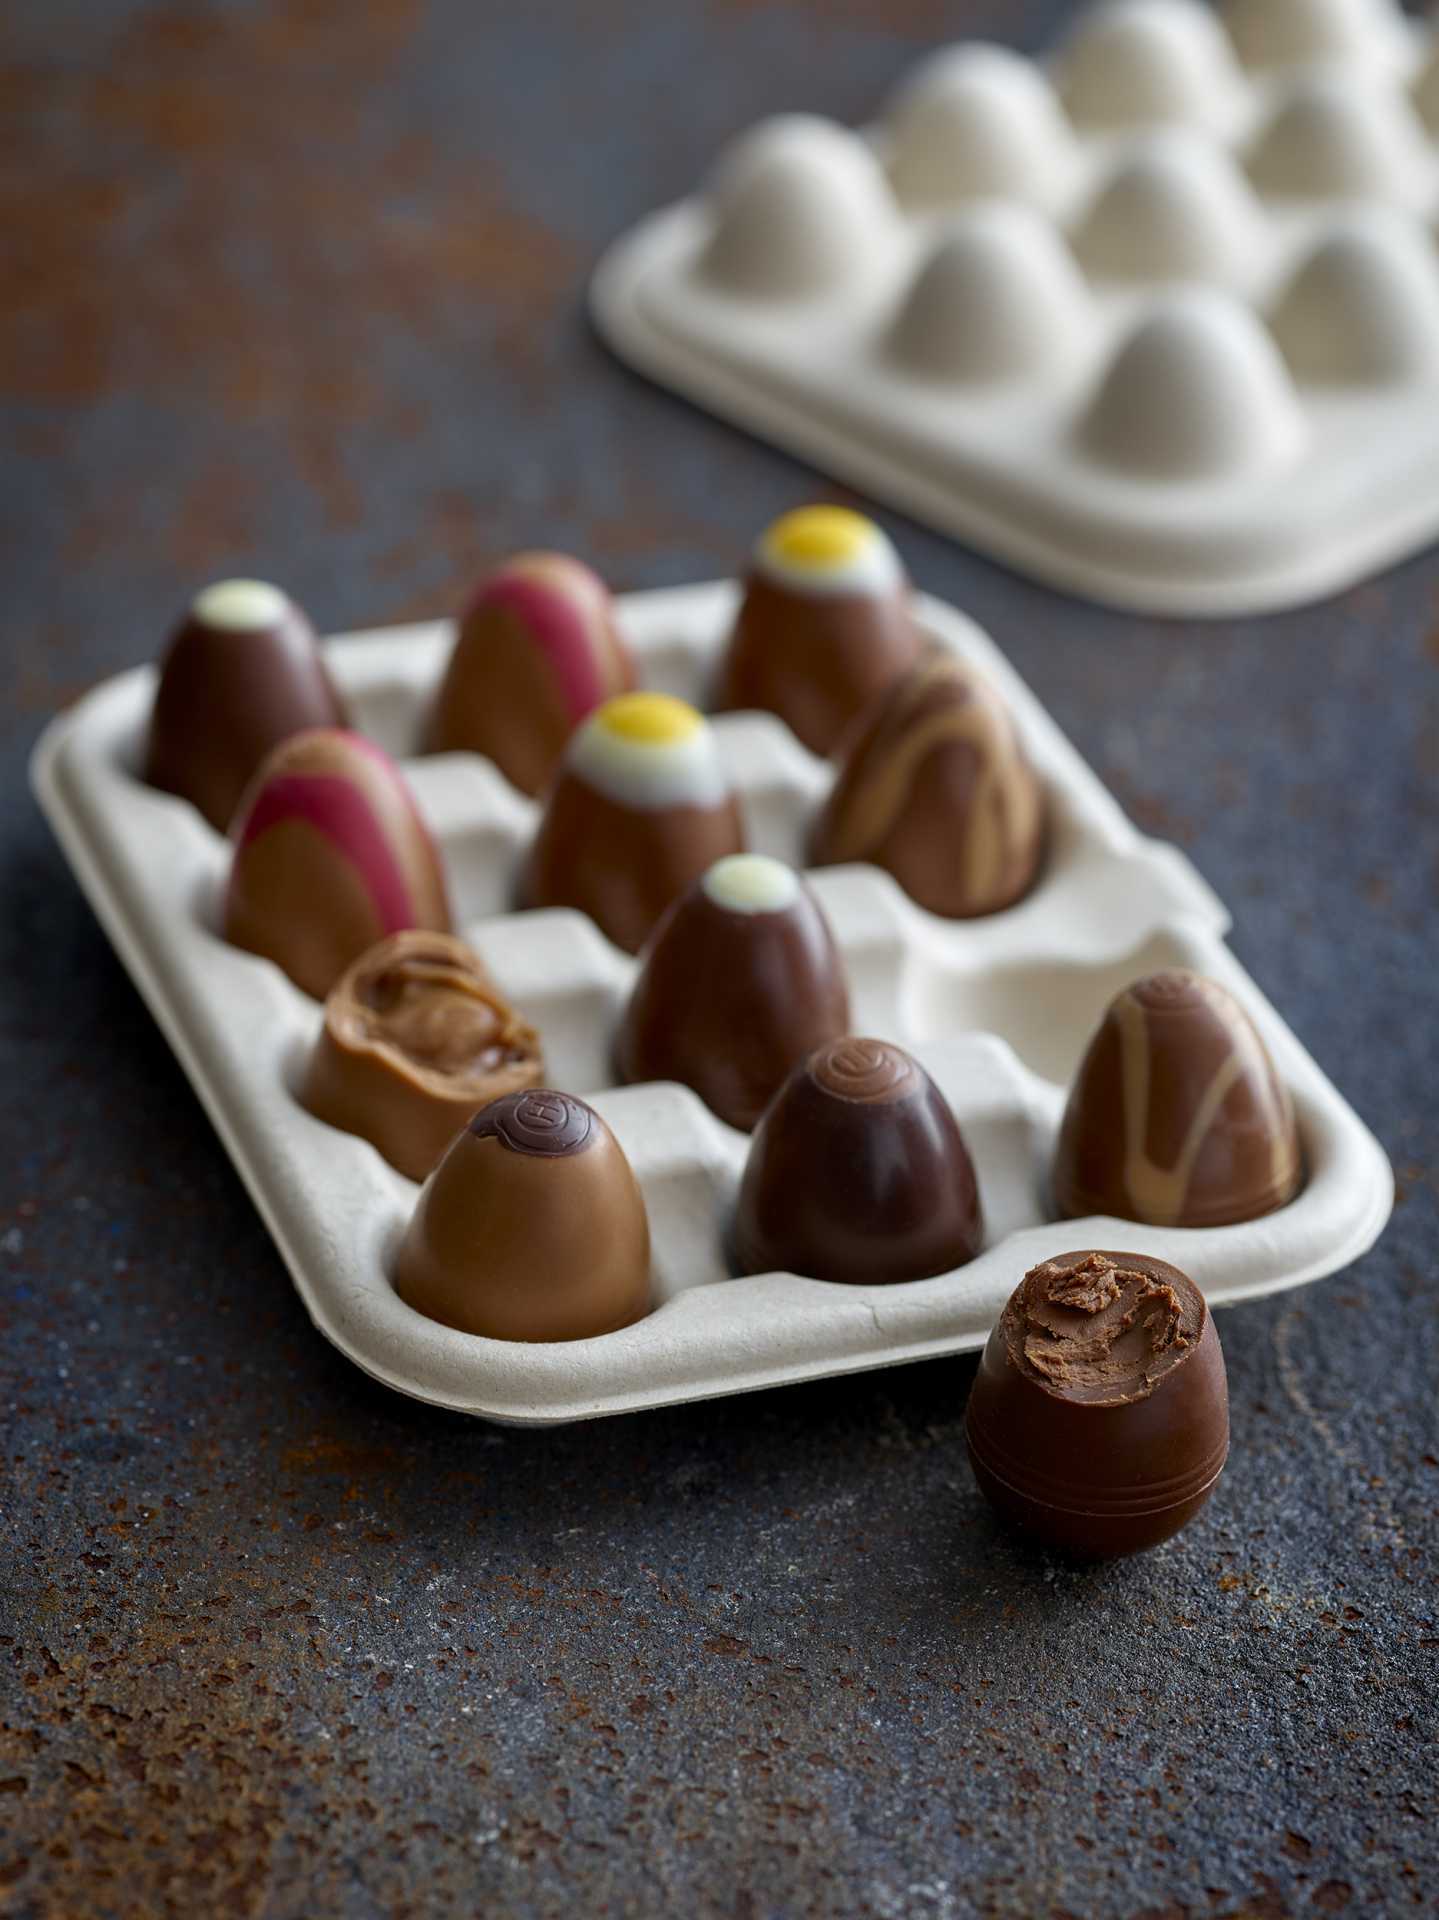 Easter 2021: Hotel Chocolat's chocolate quail eggs